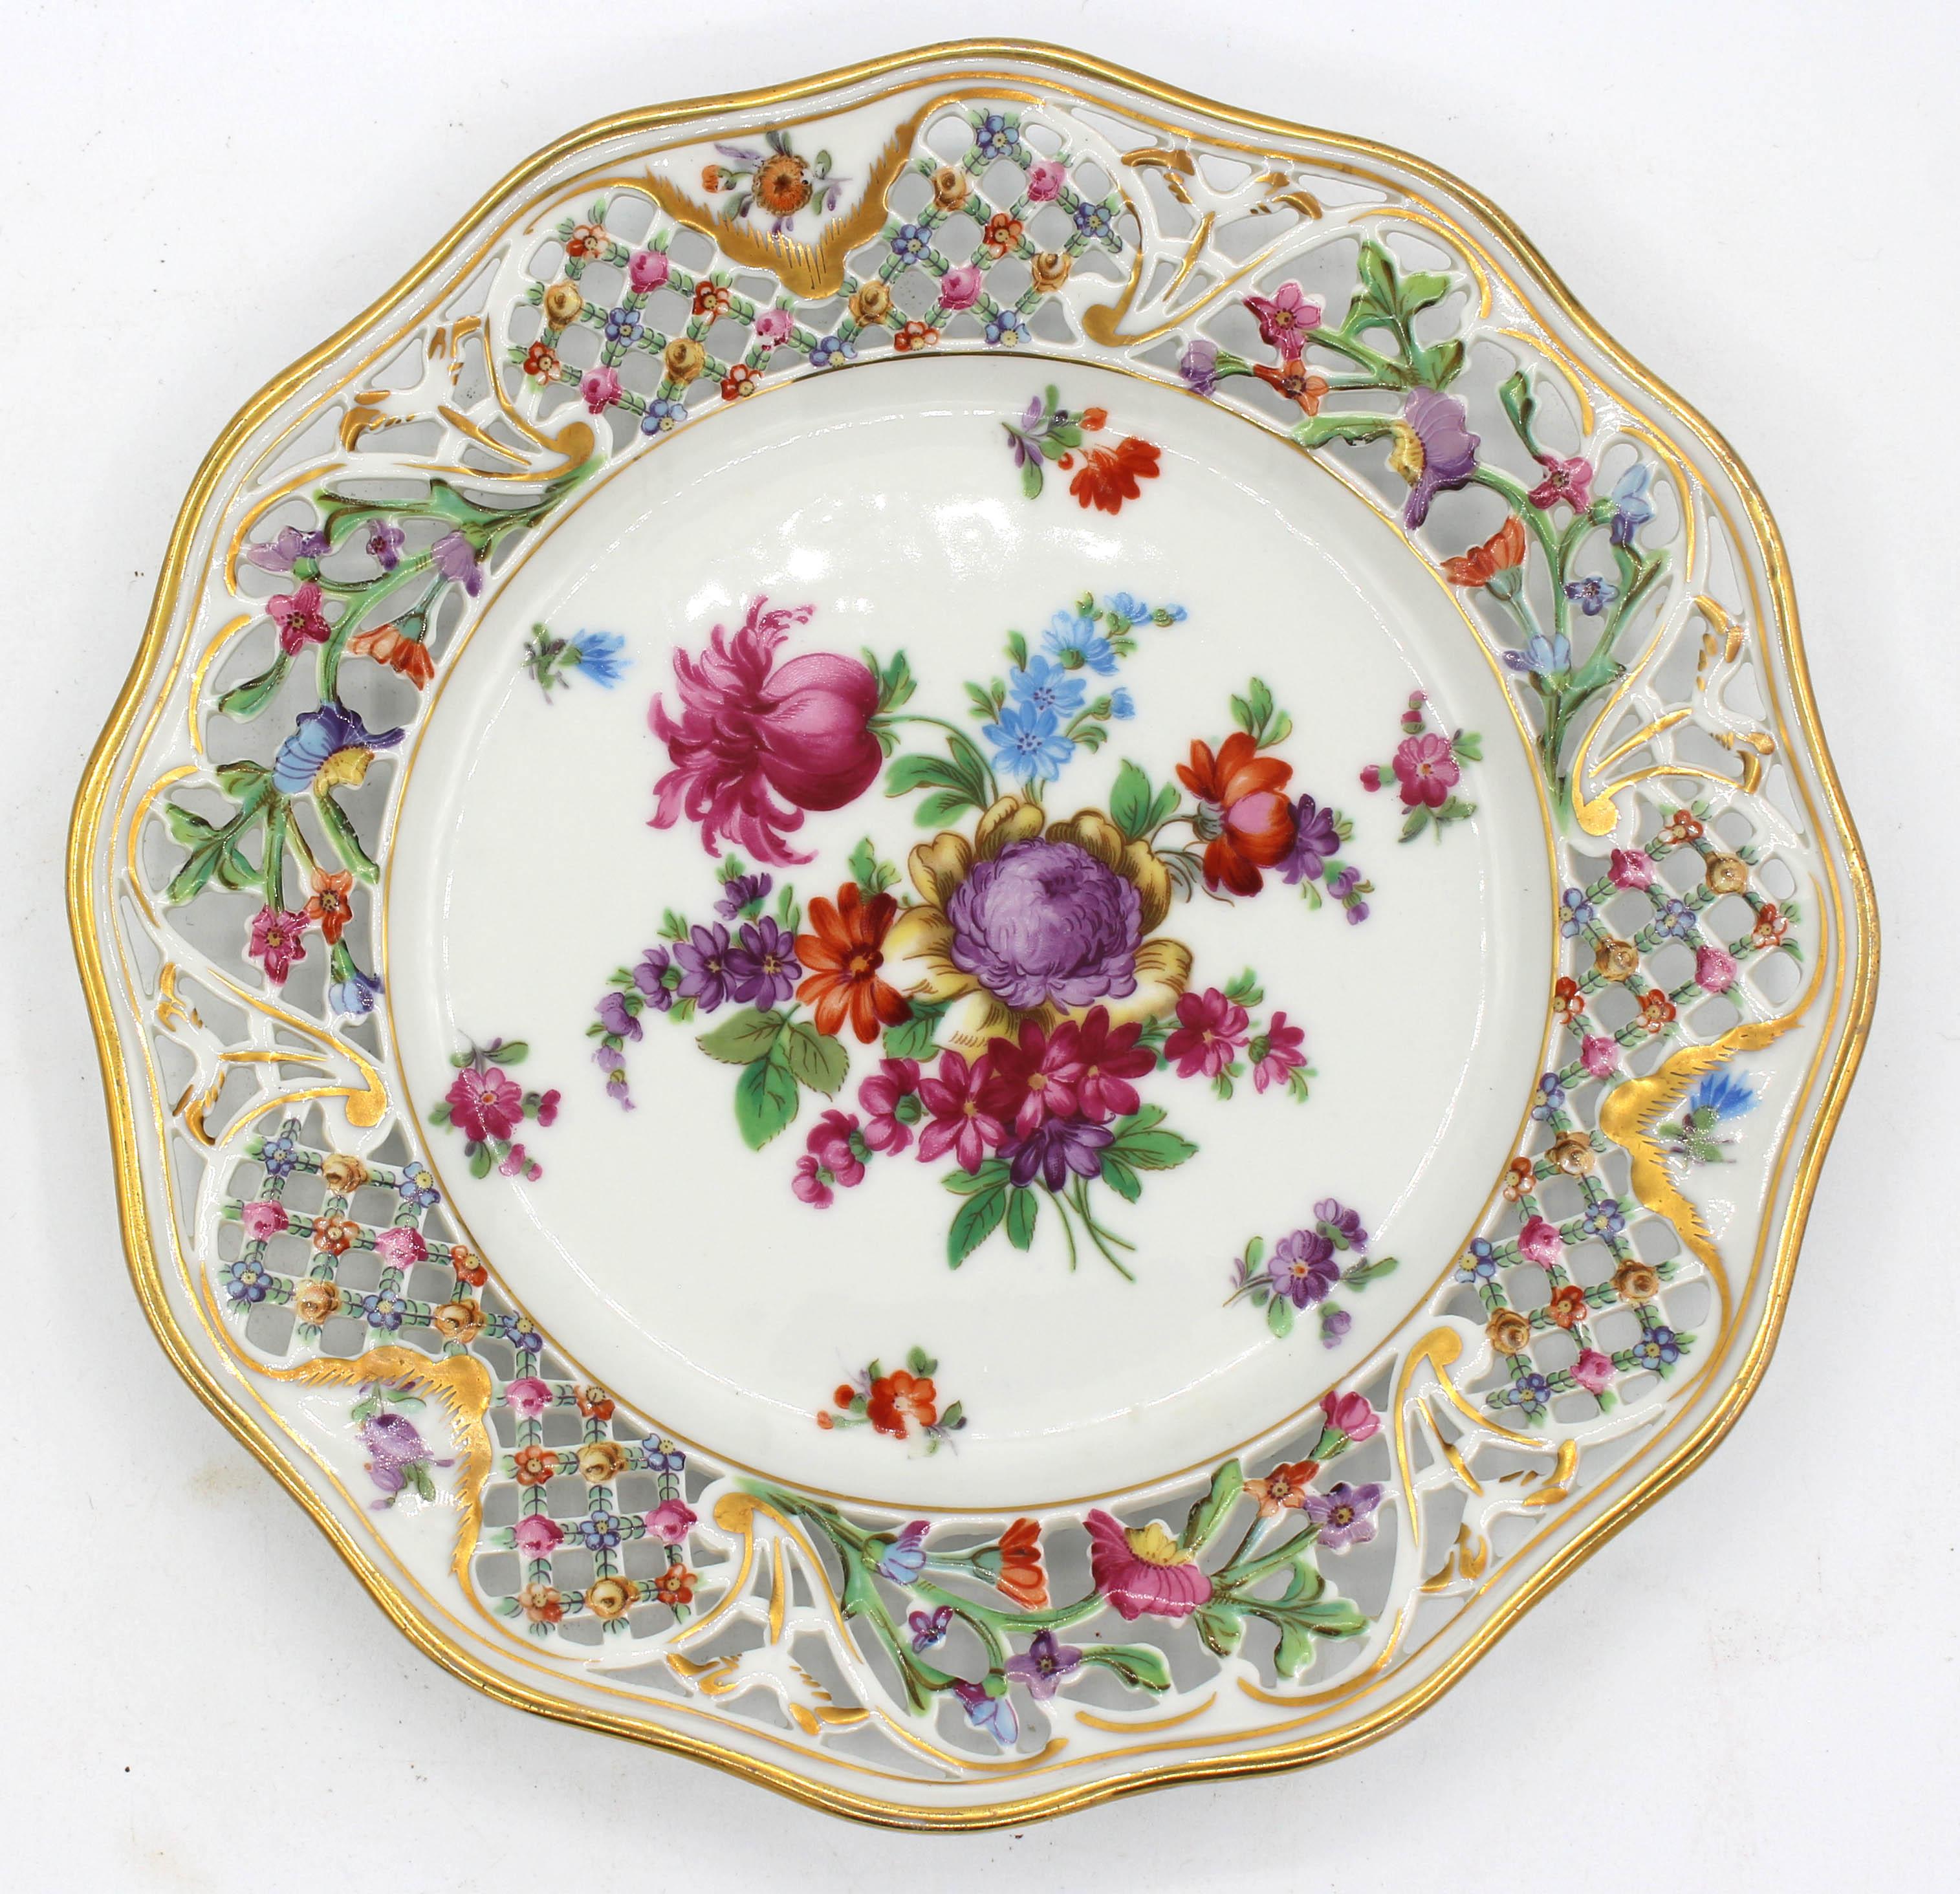 1932-1944 Set of 8 Dessert Plates by Schumann, Dresden & Bavaria periods For Sale 1